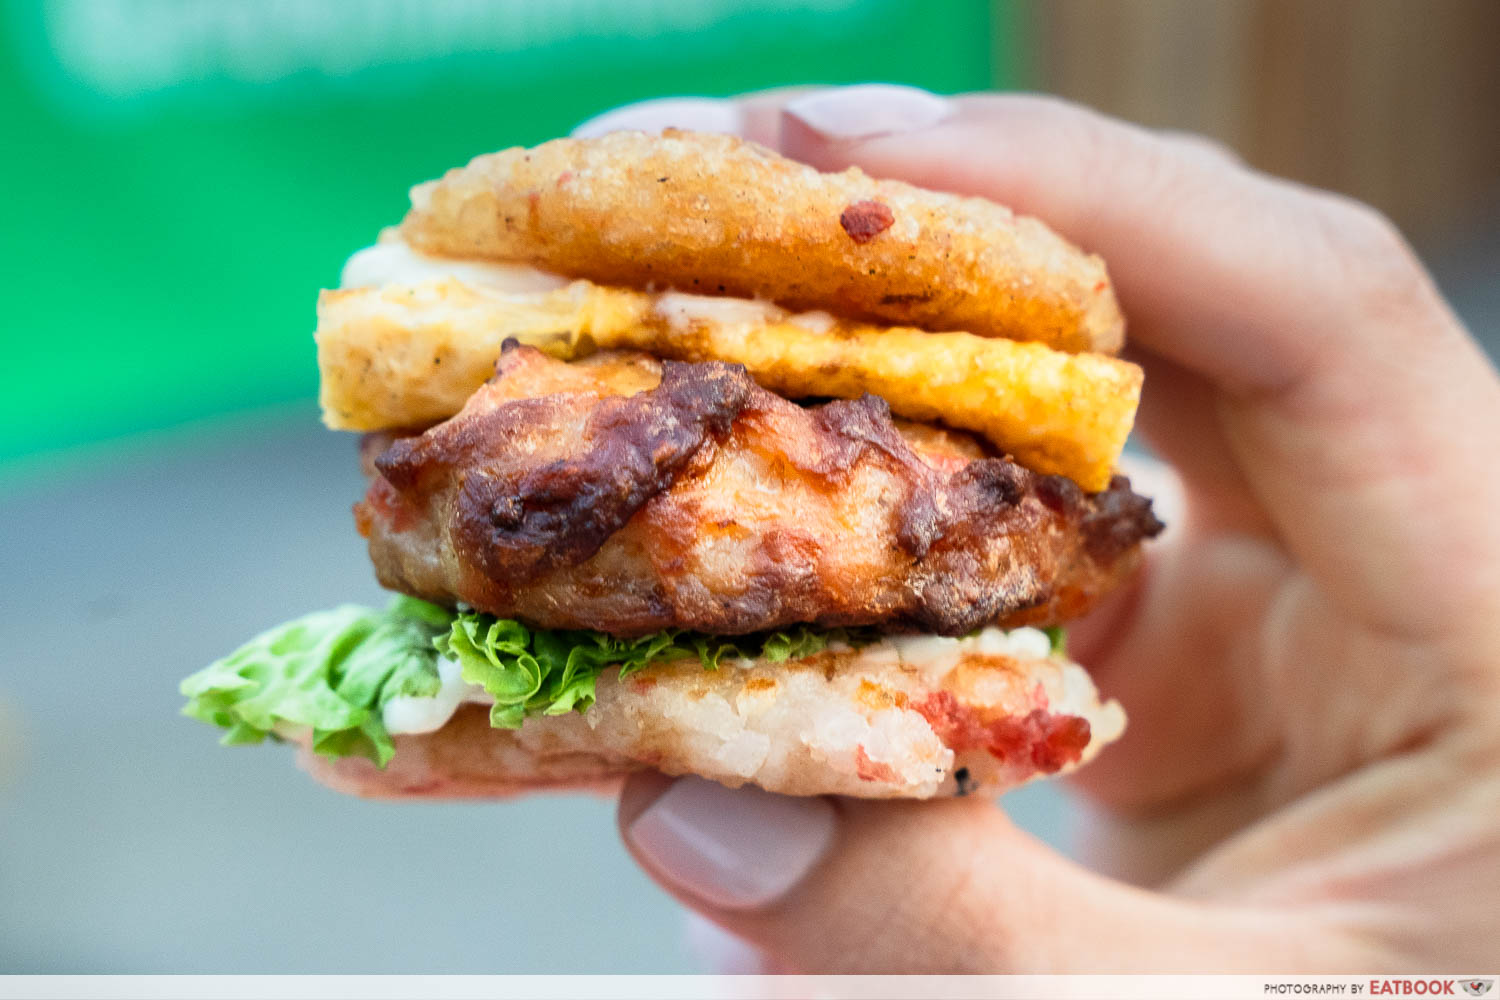 singapore food festival 2023 - fan bao bao claypot chicken rice burger